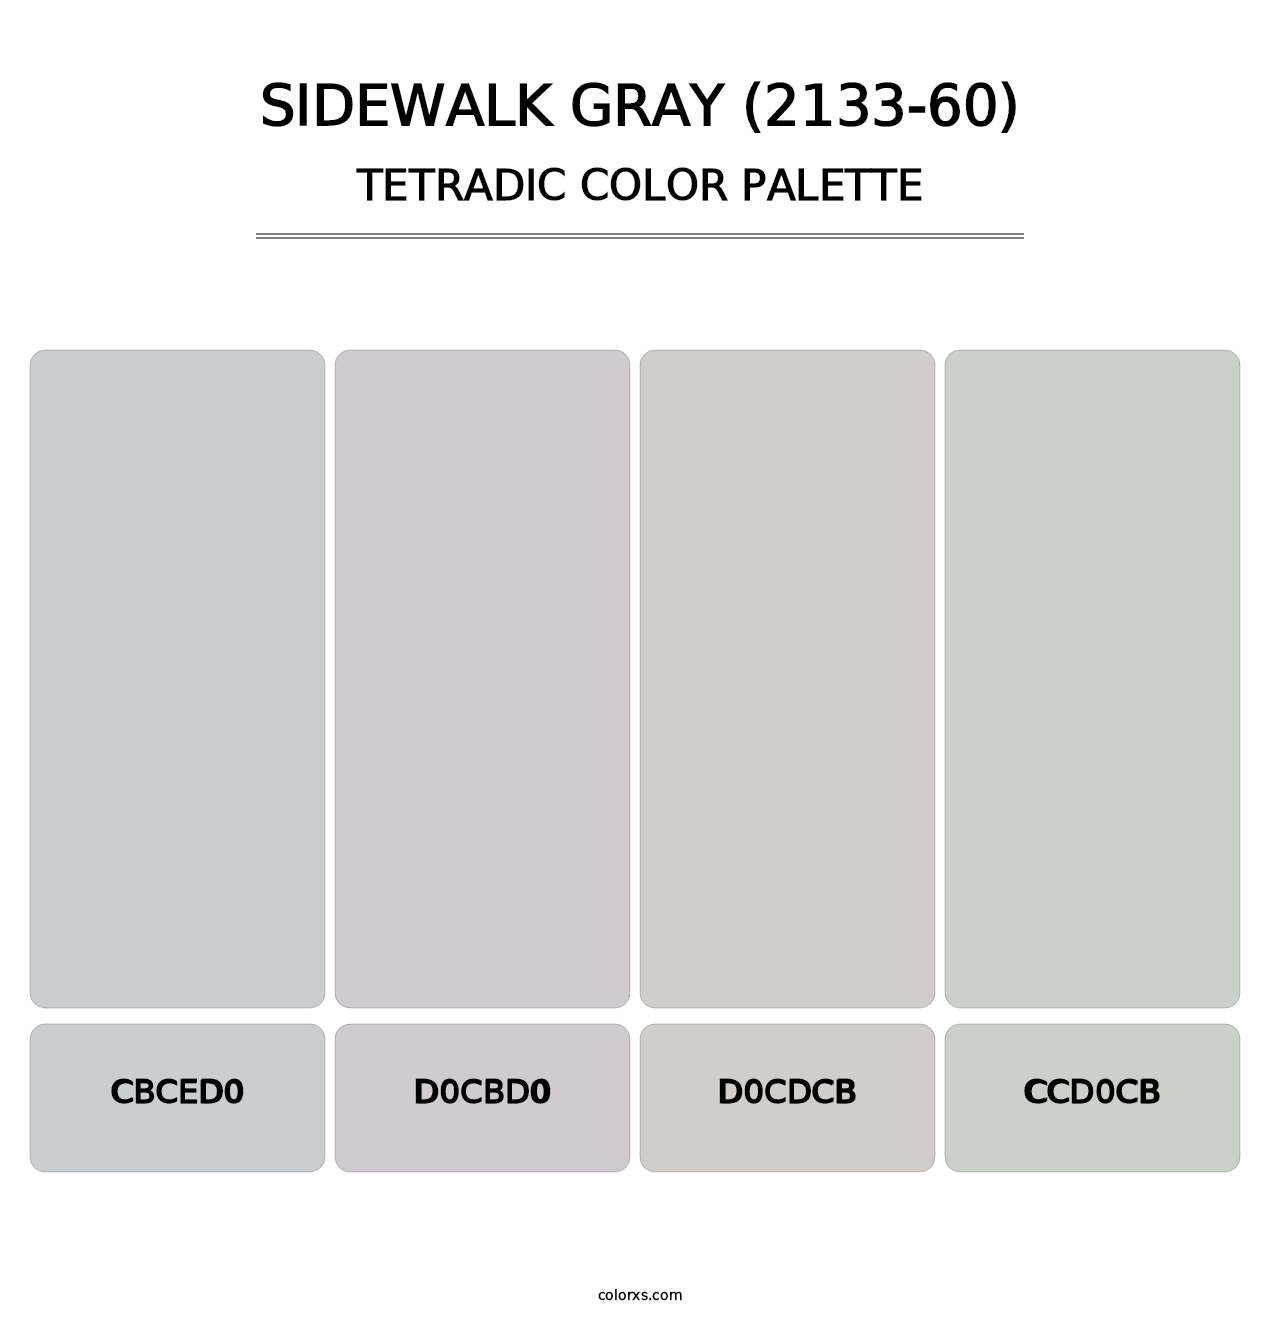 Sidewalk Gray (2133-60) - Tetradic Color Palette